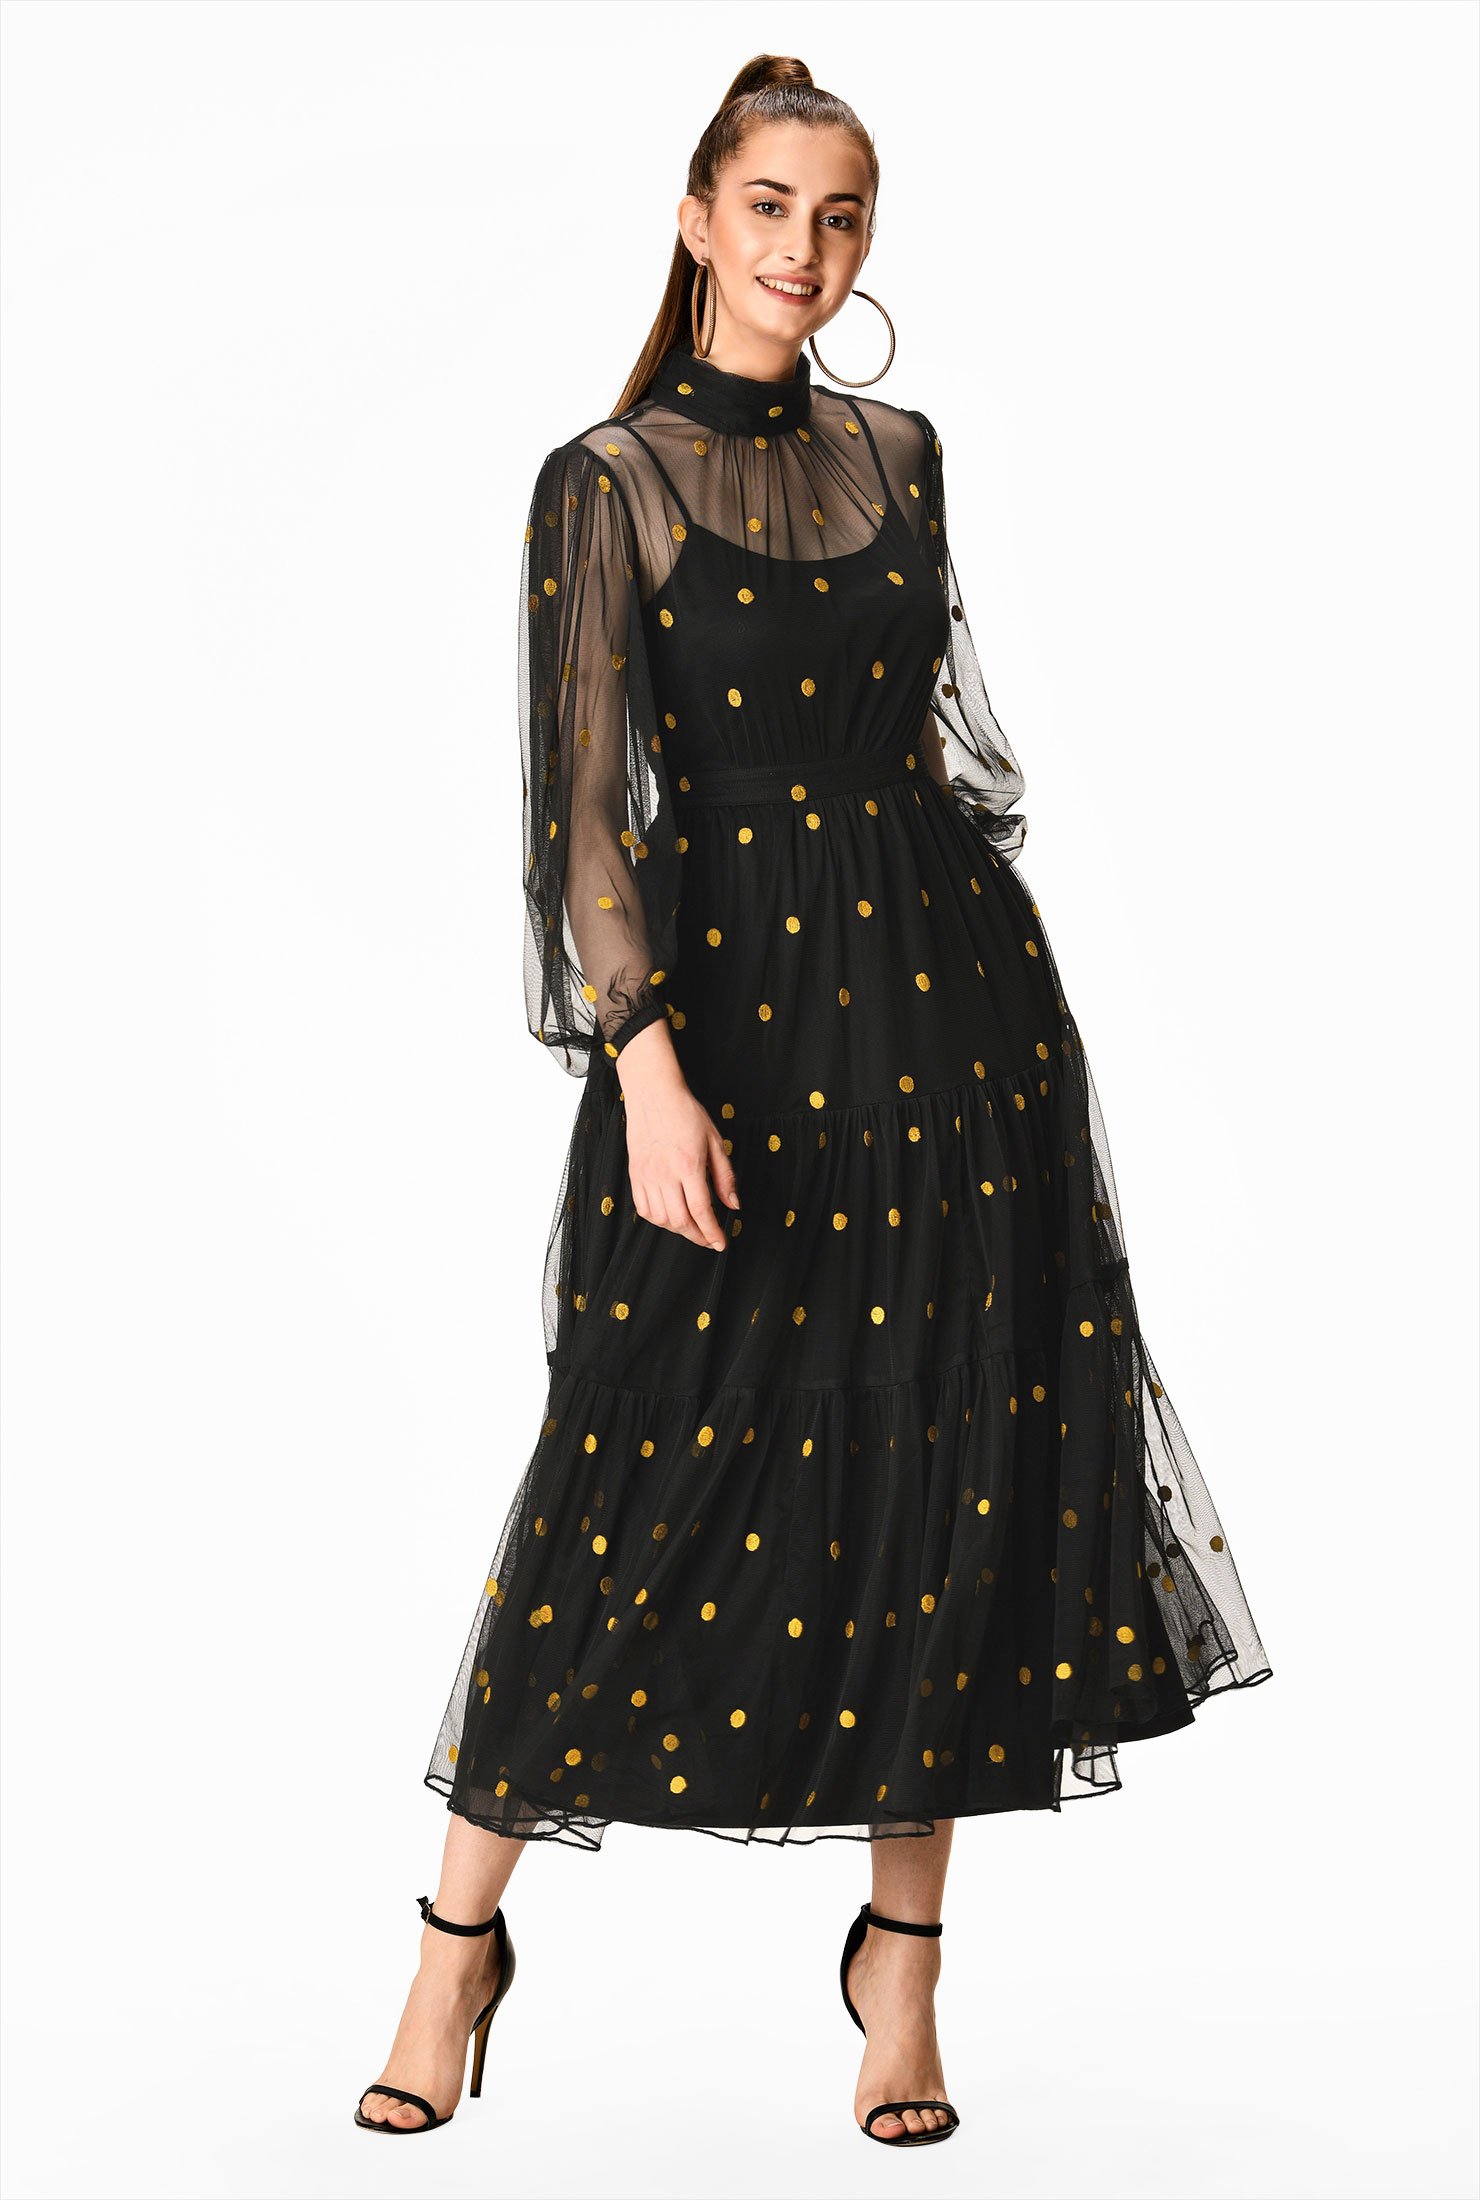 Shop Polka dot embellished tulle and cotton knit ruched dress | eShakti